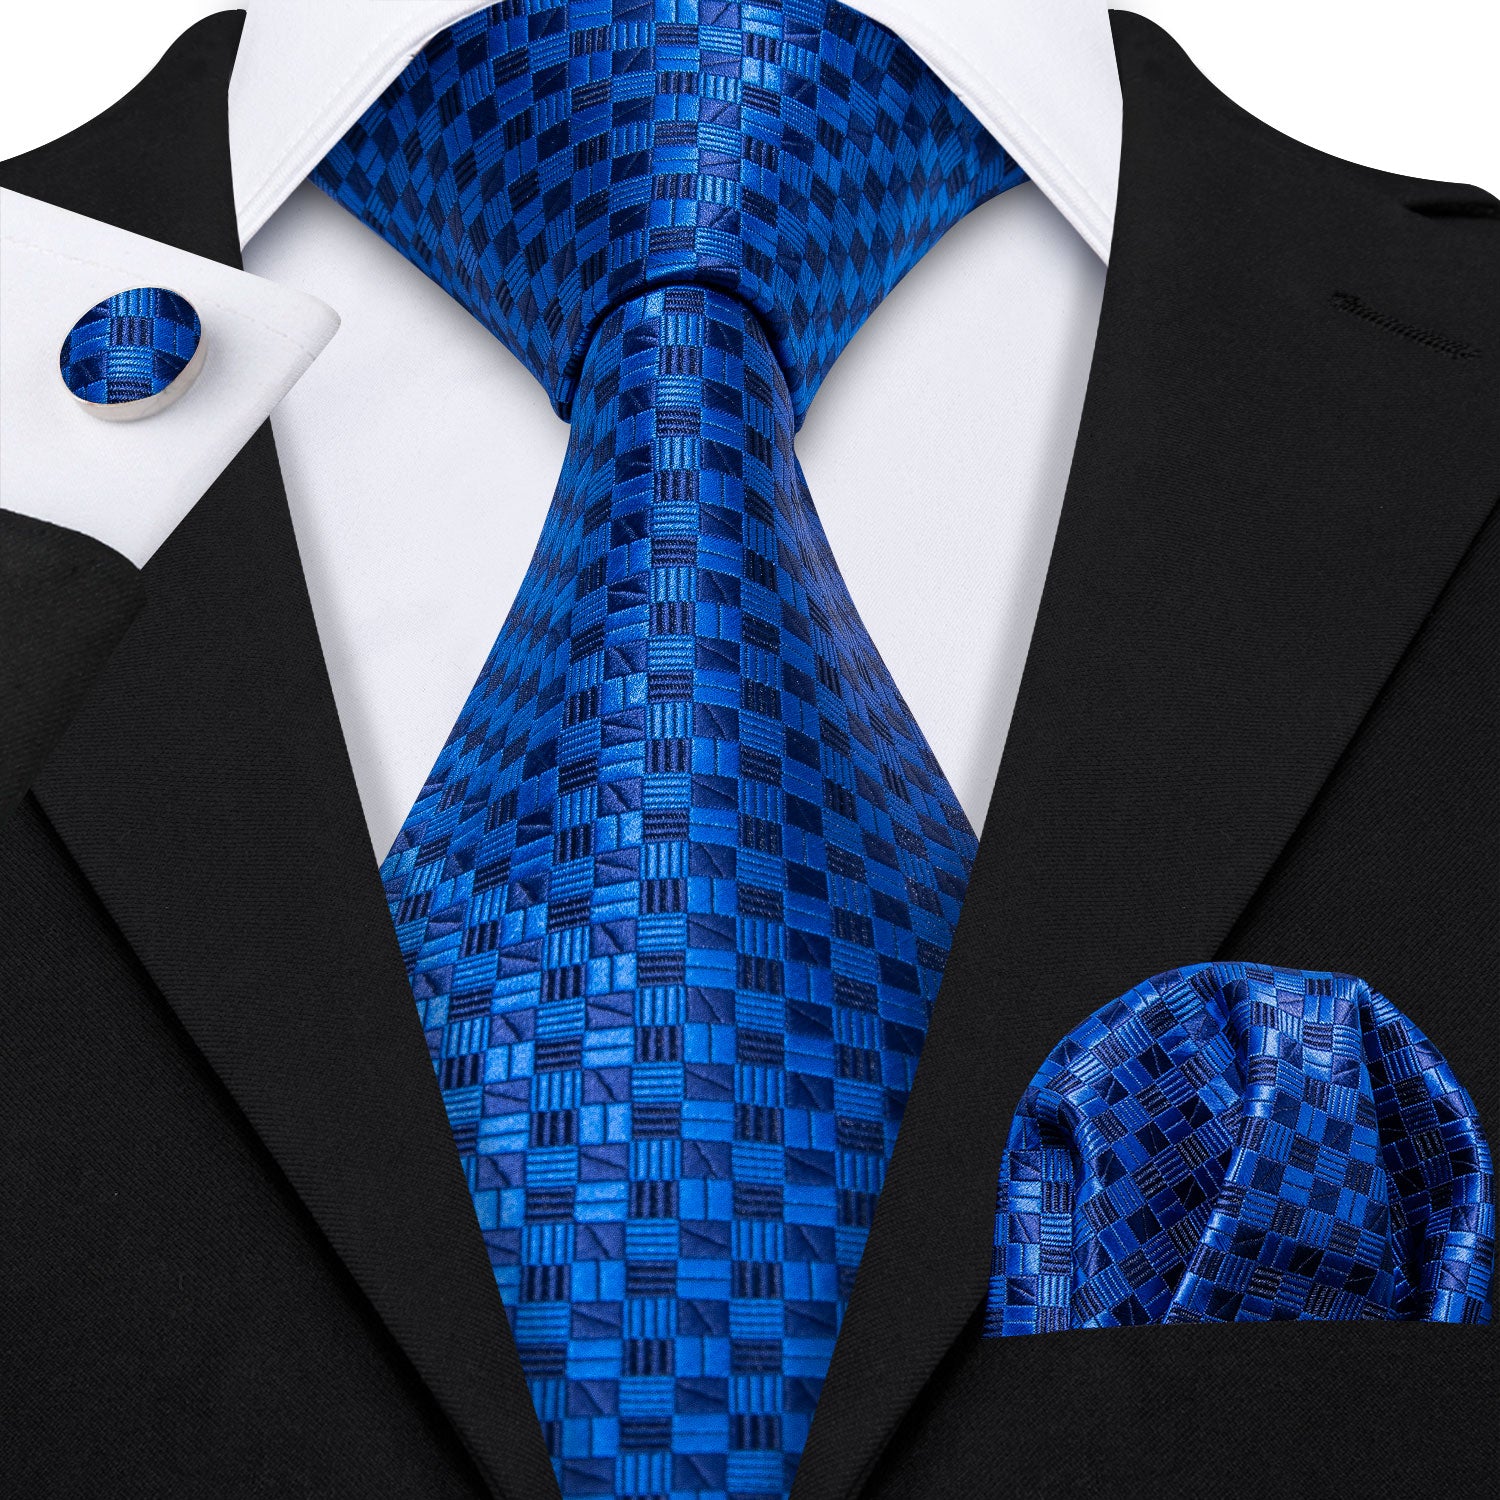 Navy Blue Checked Tie Pocket Square Cufflinks Set Gift Box Set